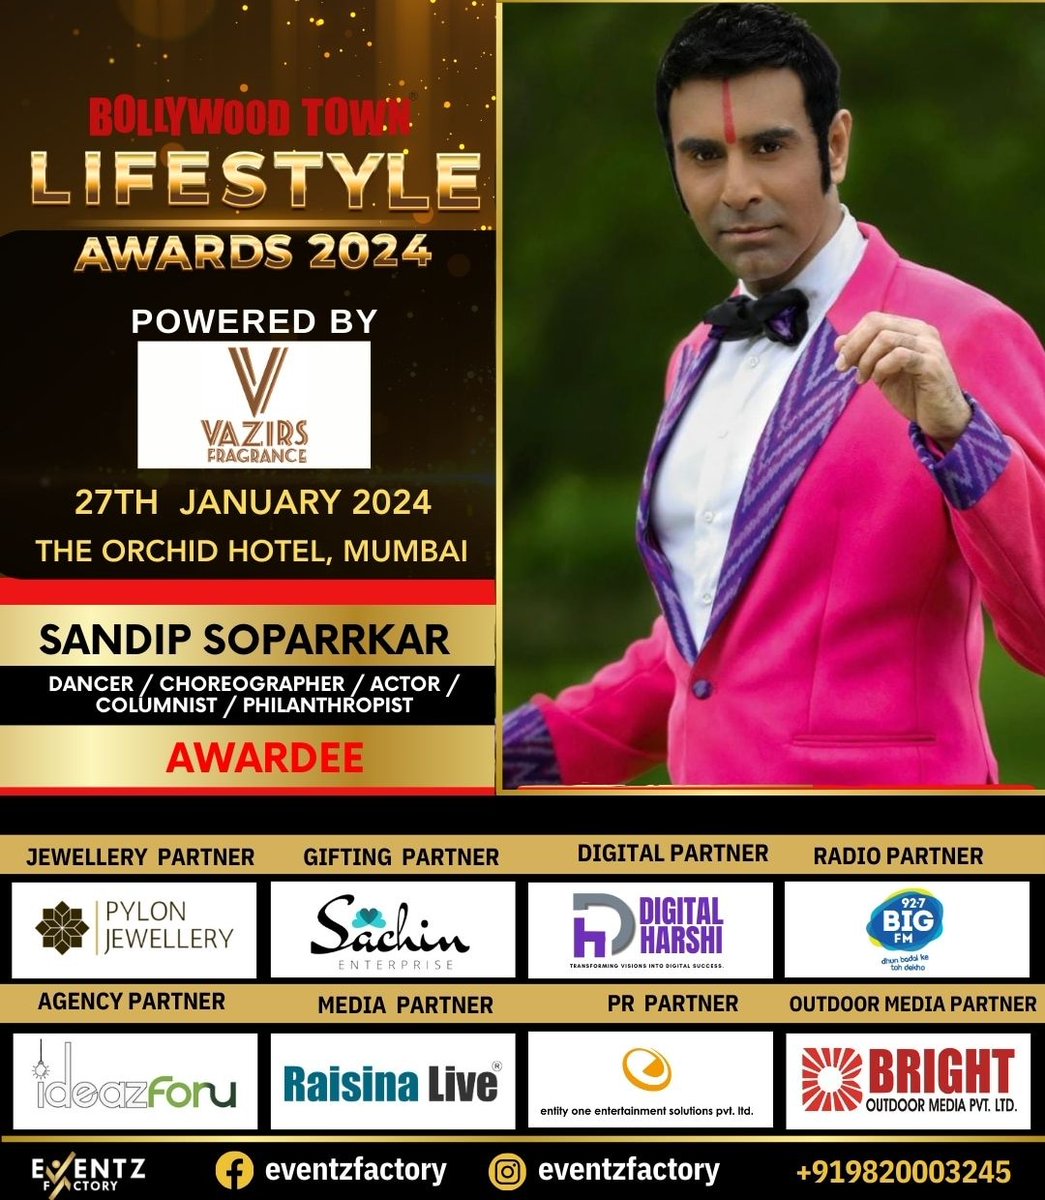 #BollywoodTownLifestyleAwards #SandipSoparrkar #BollywoodTown #EventzFactory